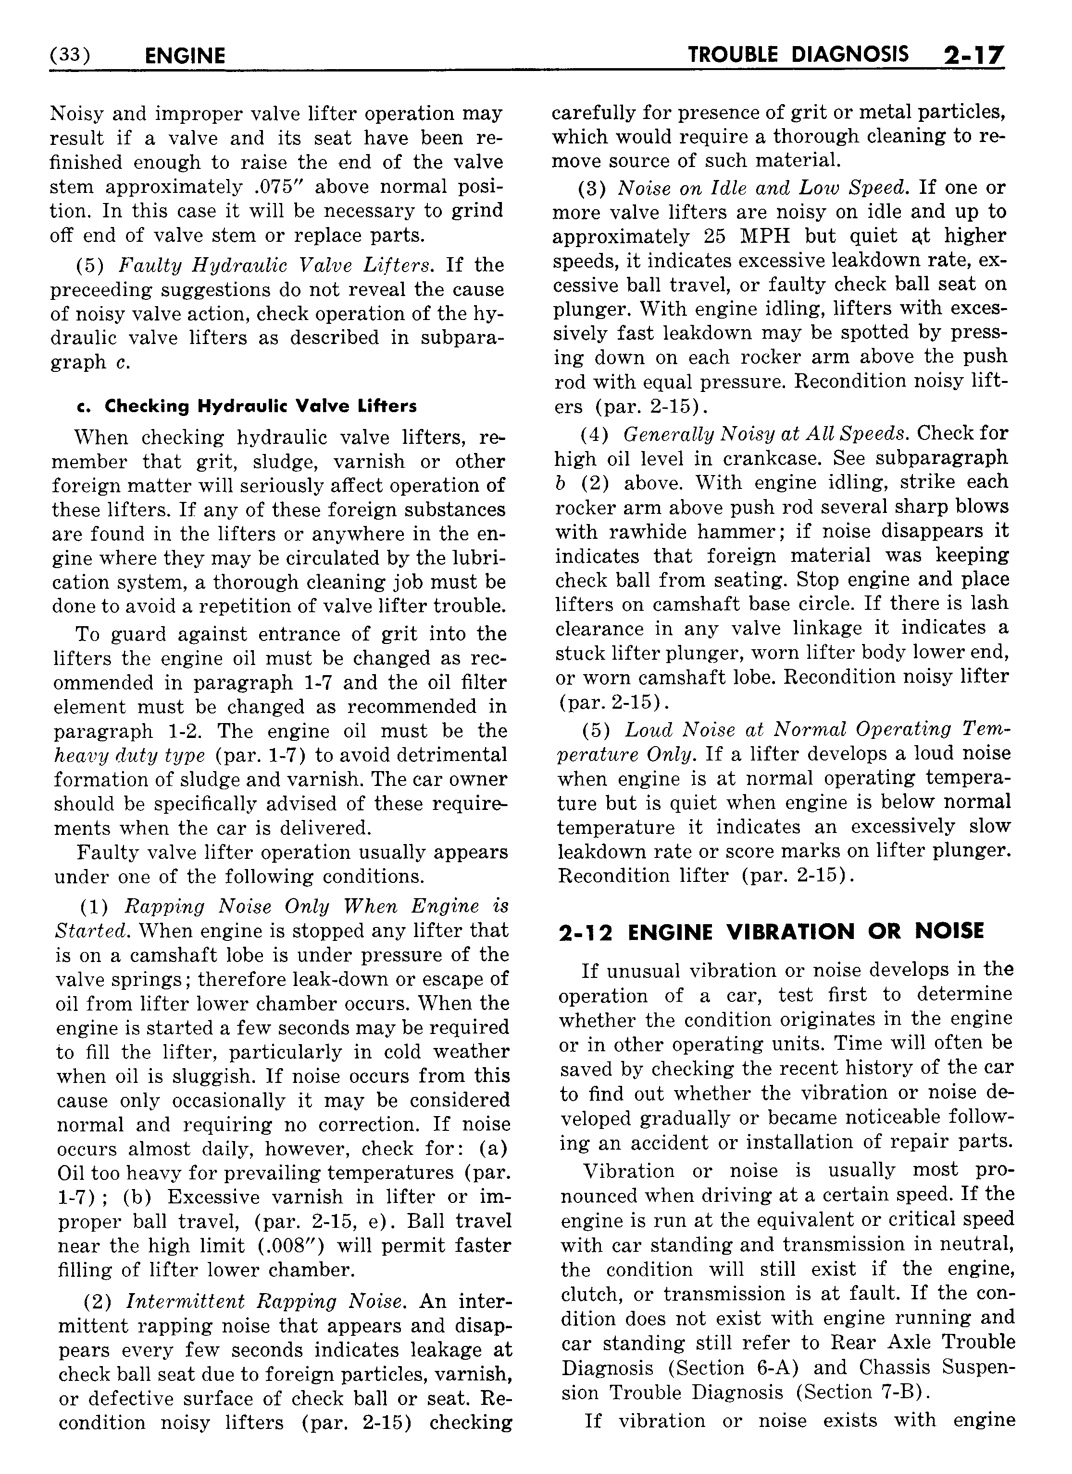 n_03 1954 Buick Shop Manual - Engine-017-017.jpg